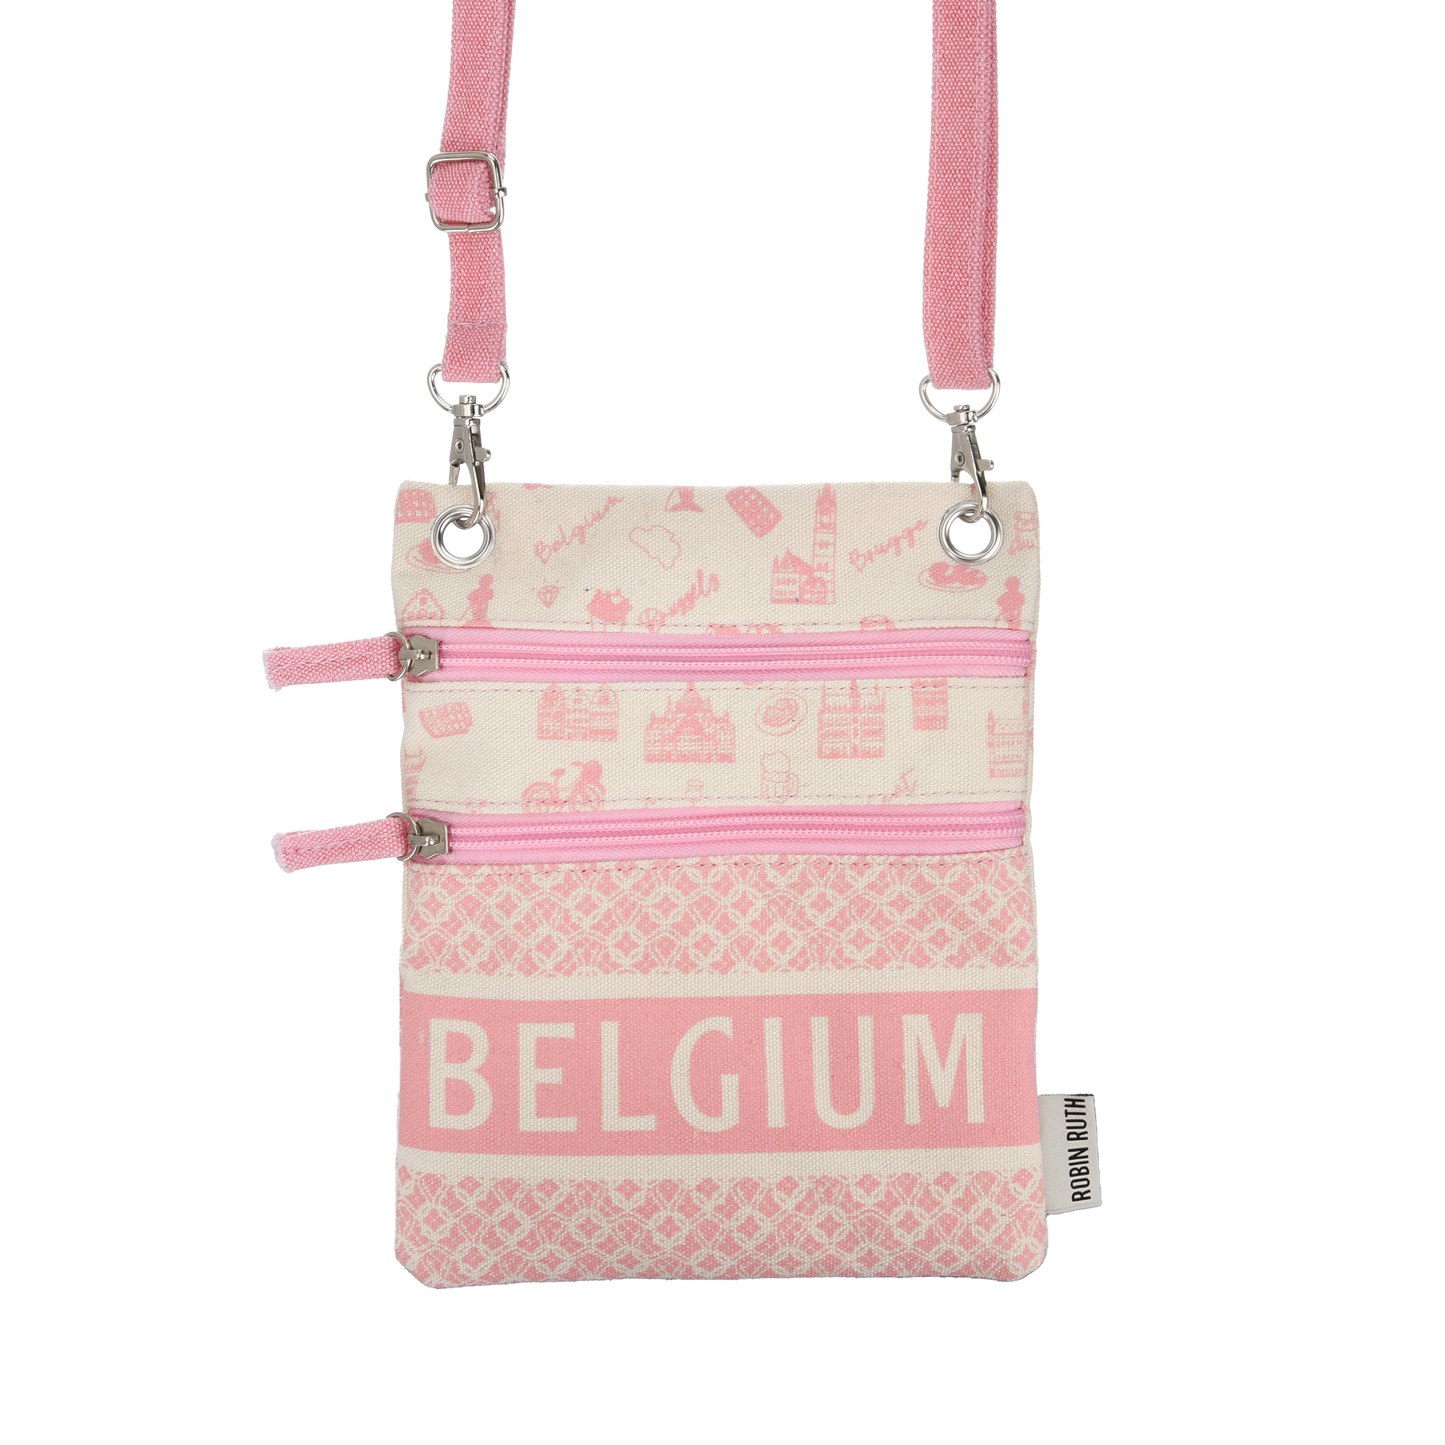 Passport Bag - Belgium